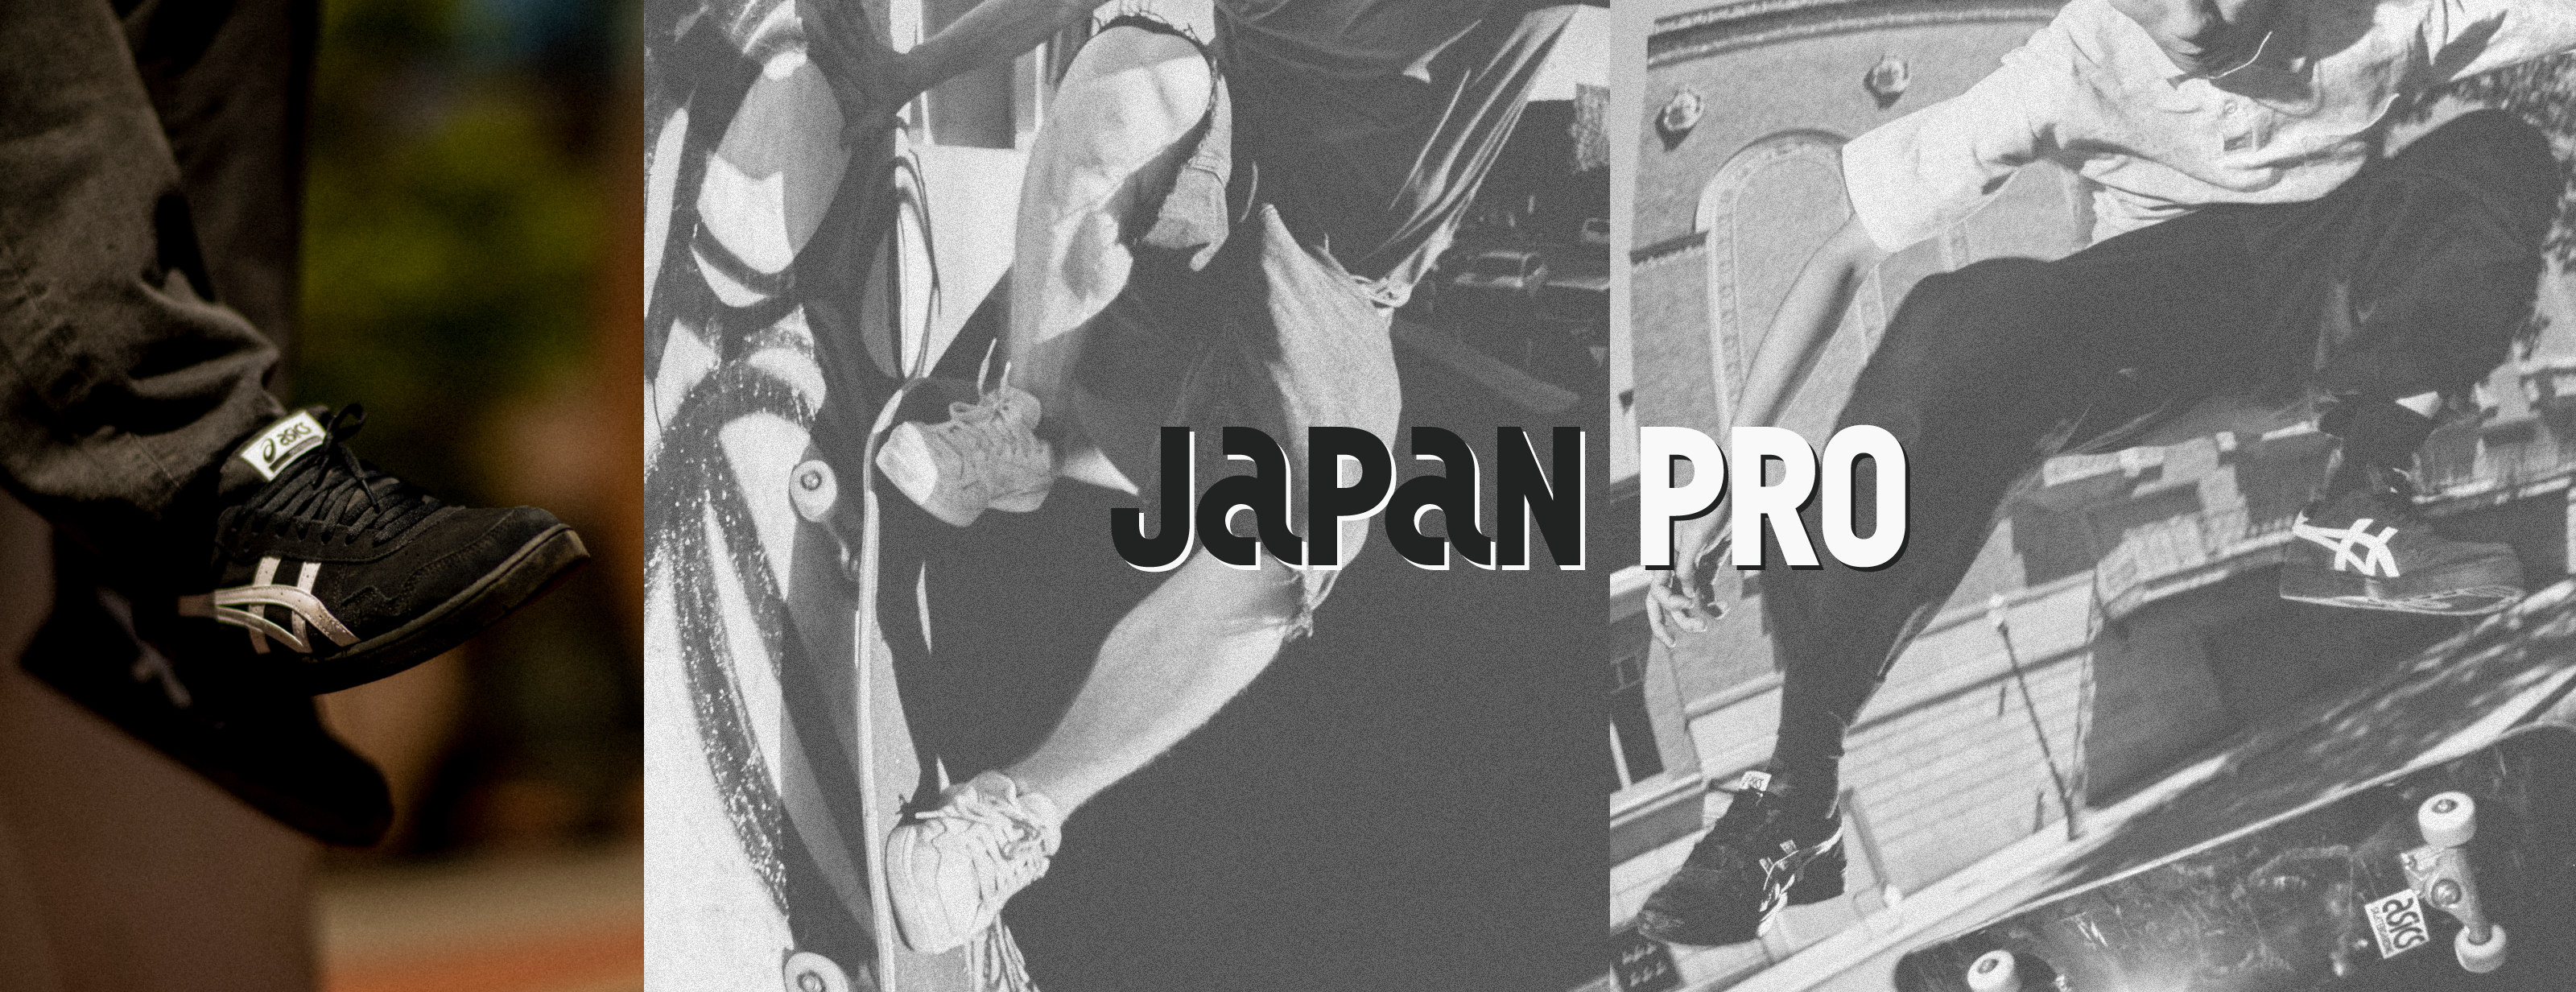 JAPAN_PRO_HERO_PC